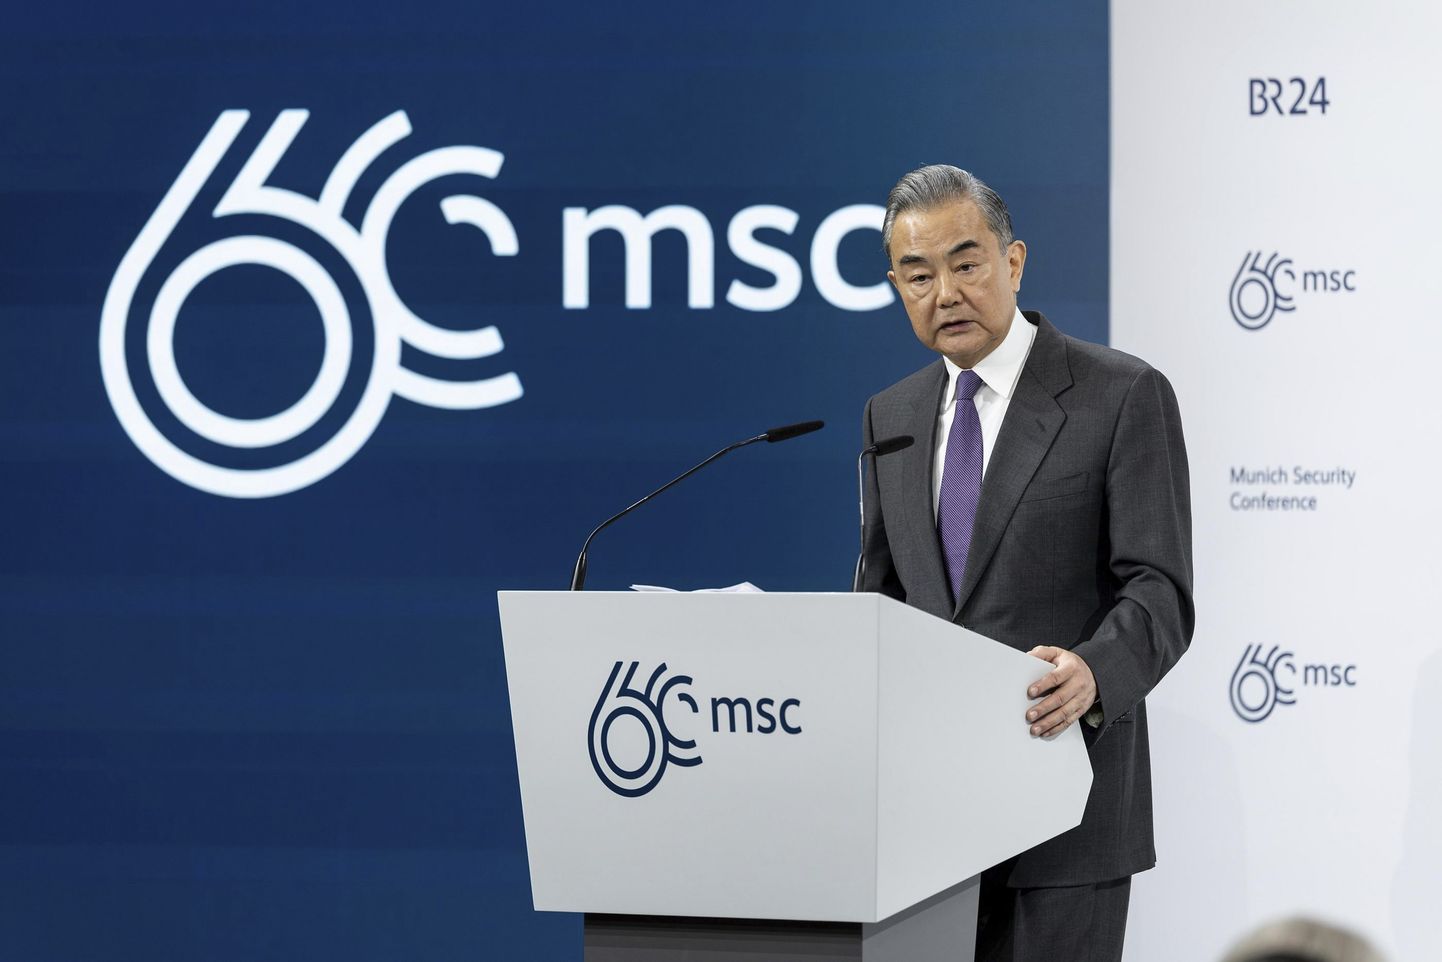 Hiina välisminister Wang Yi esinemas Müncheni julgeolekukonverentsil.